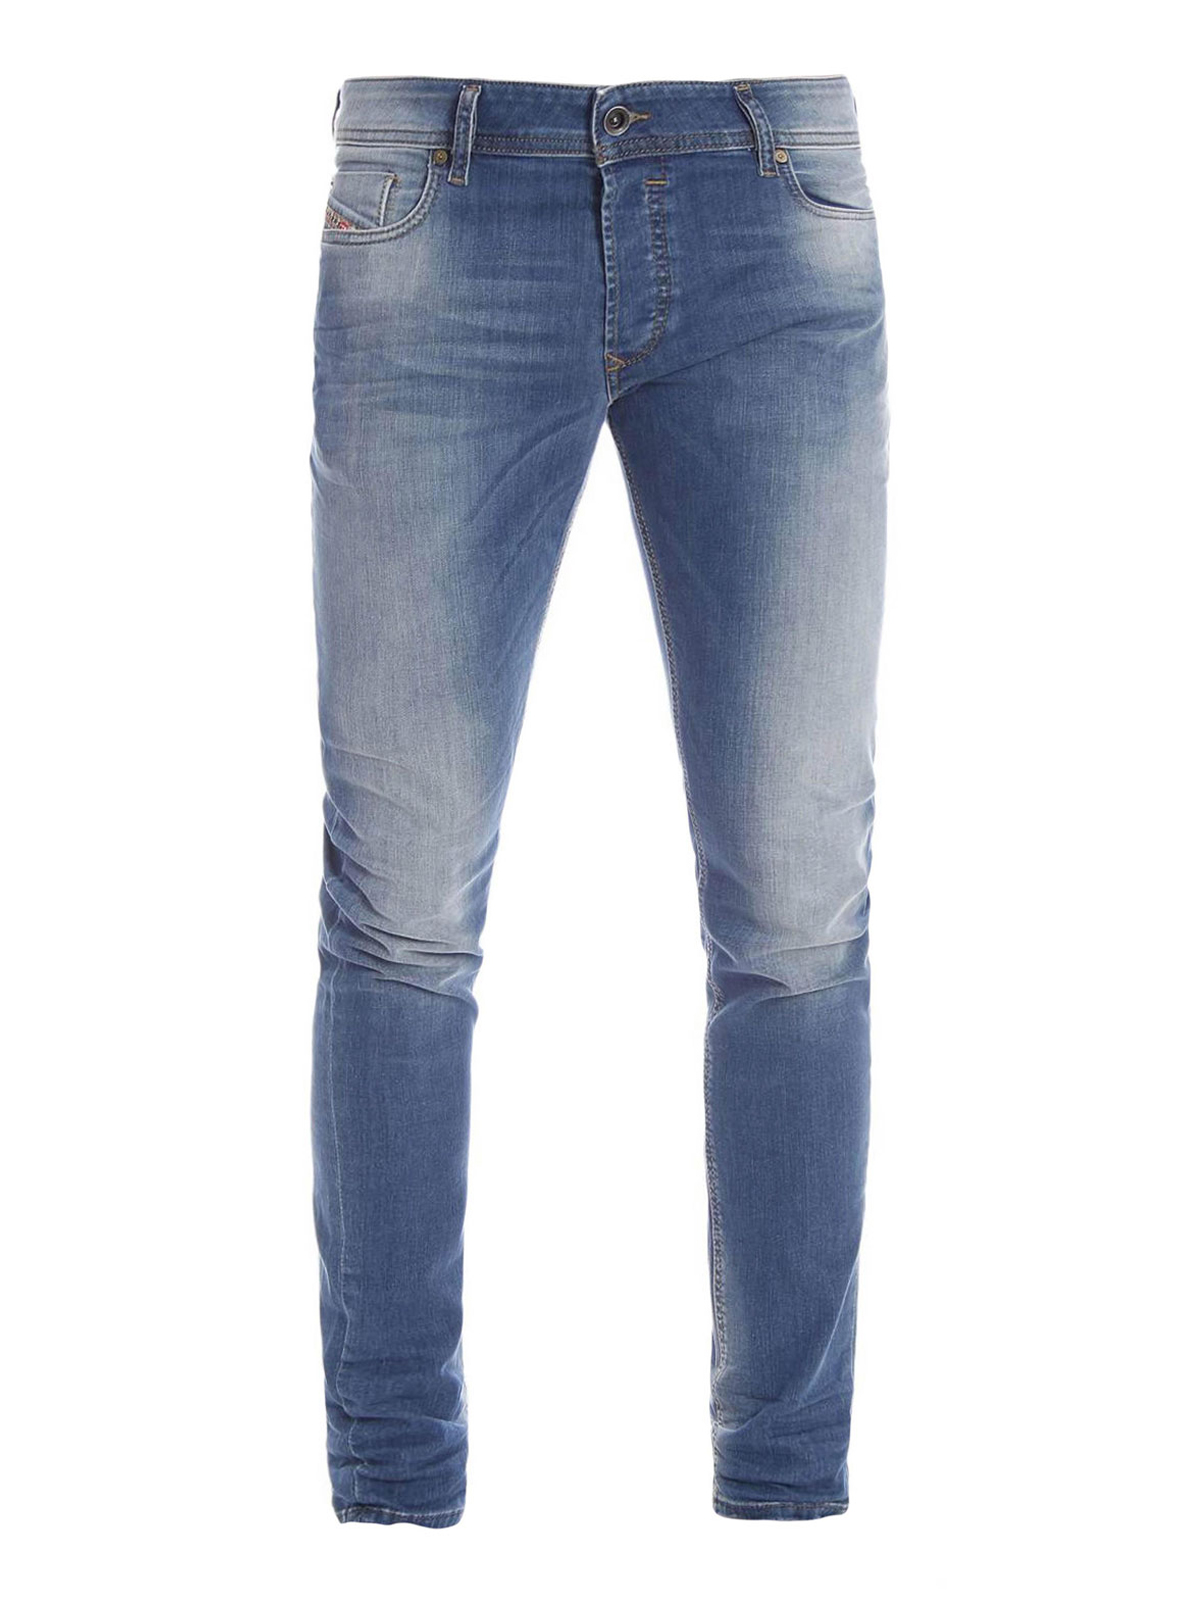 Skinny jeans Diesel - Sleenker slim jeans - 00S7VG670K01 | iKRIX.com